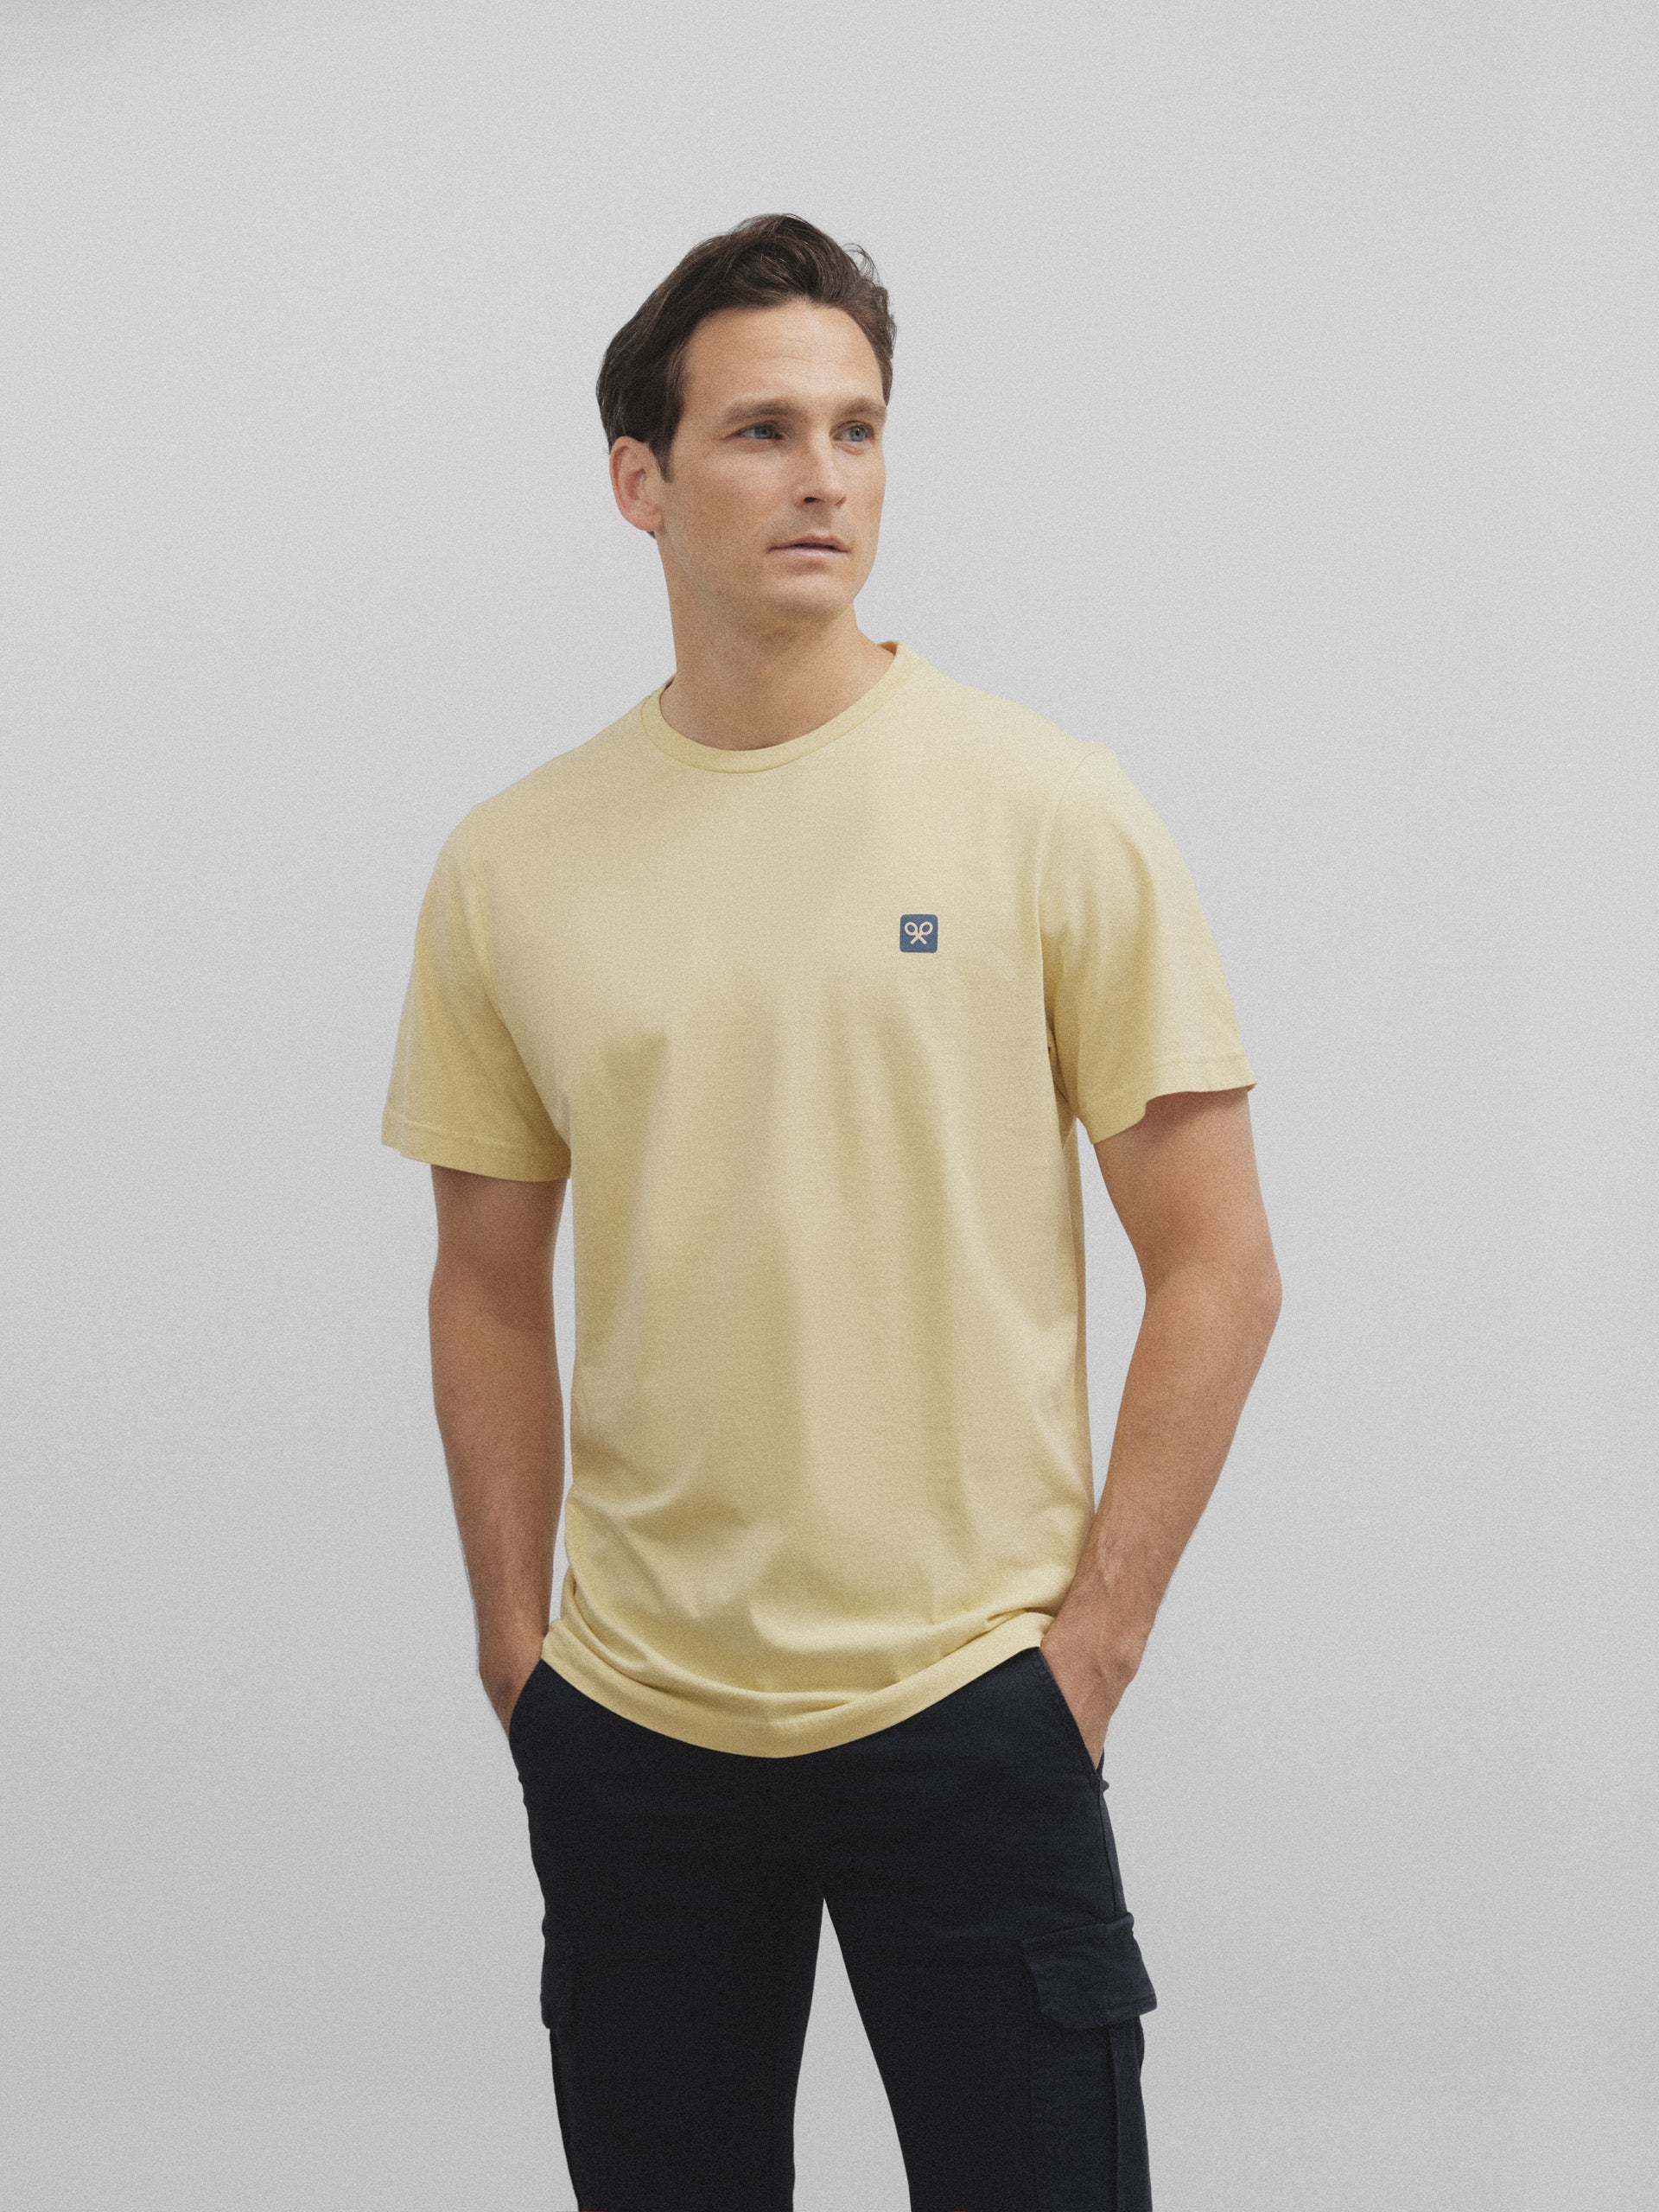 Yellow racket check t-shirt